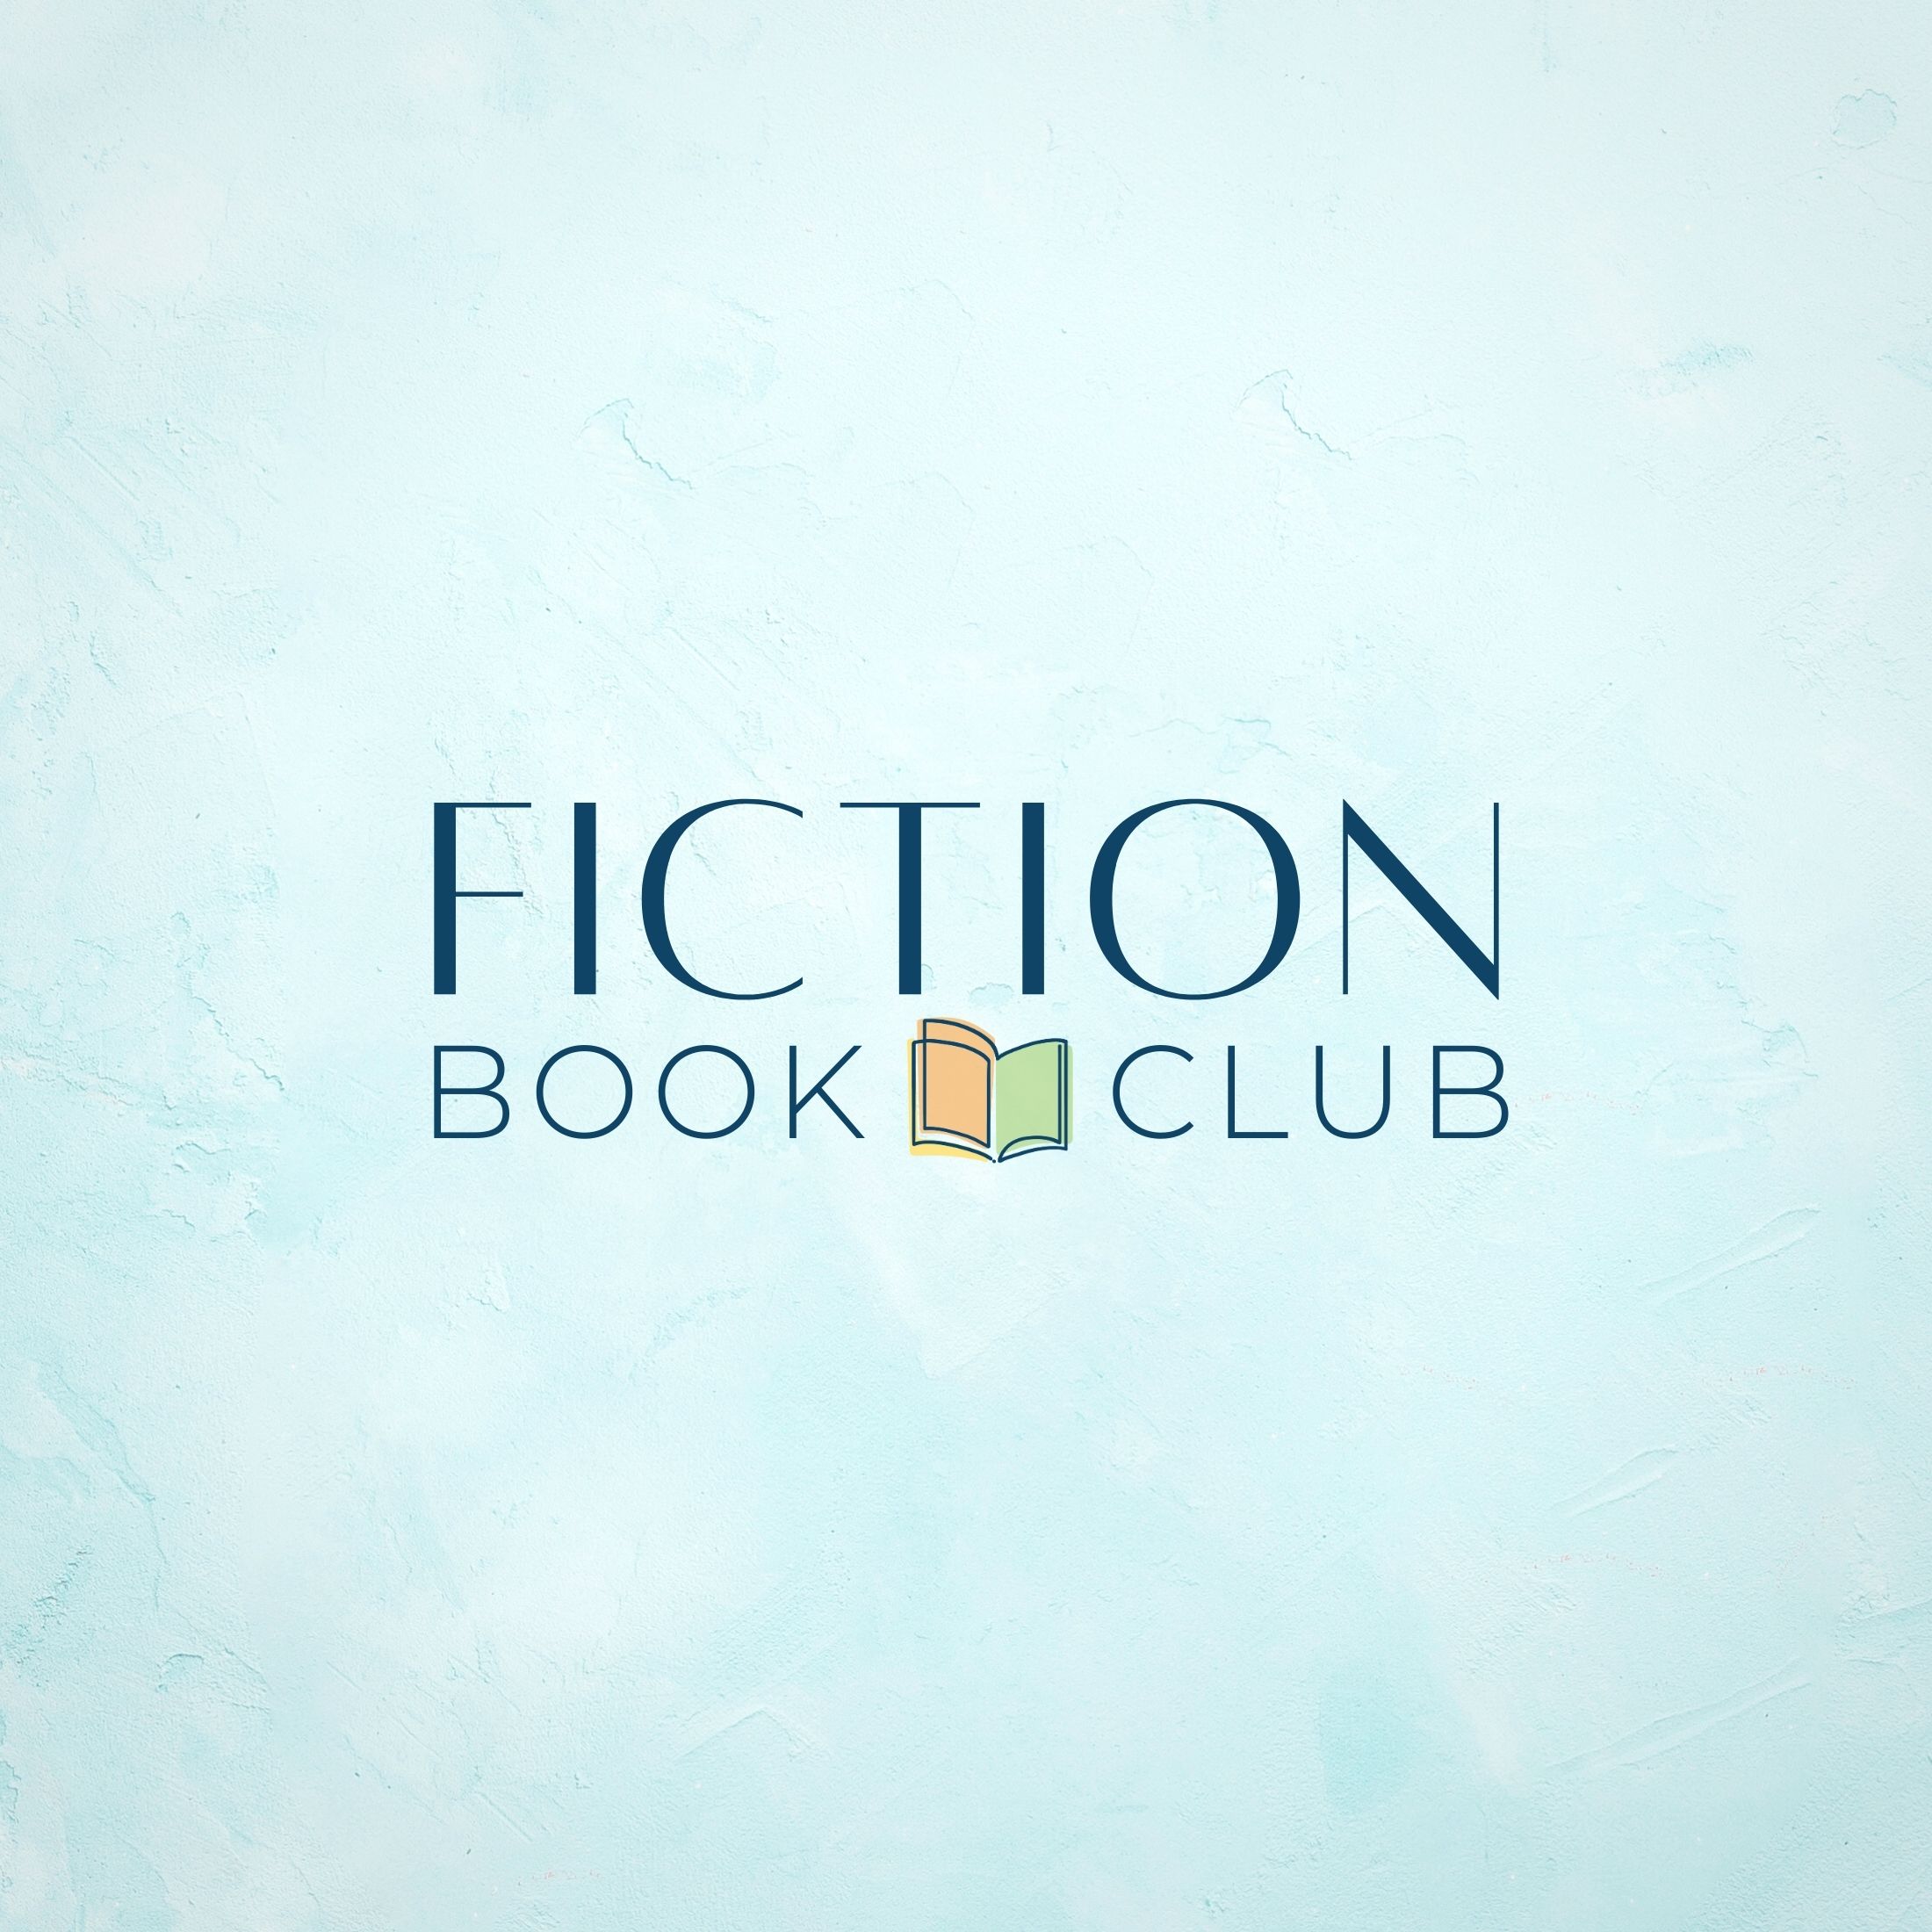 Fiction book club logo